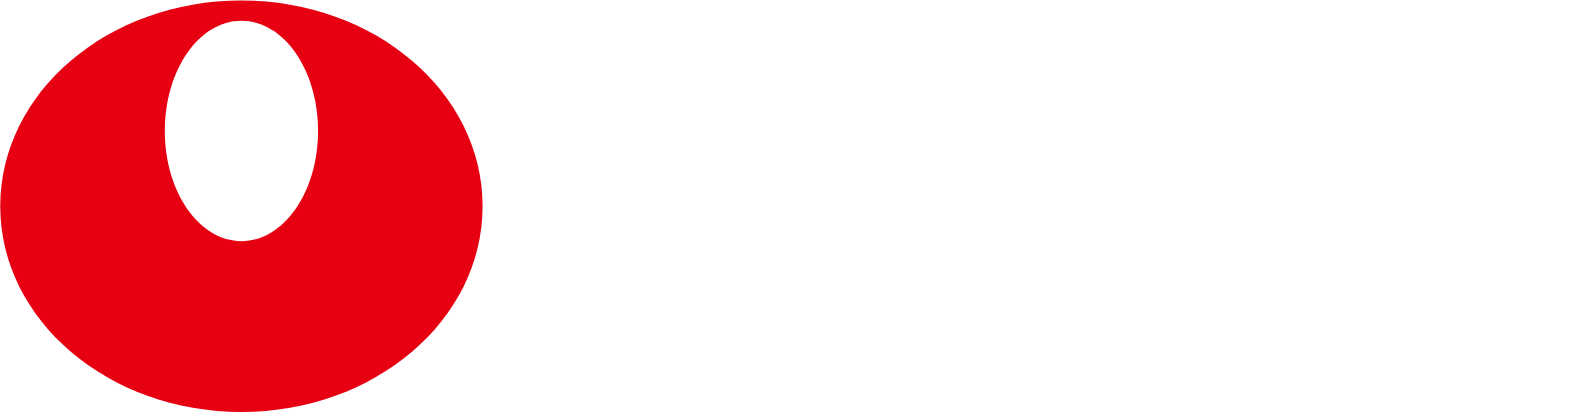 Nongshim Logo groß für dunkle Hintergründe (transparentes PNG)